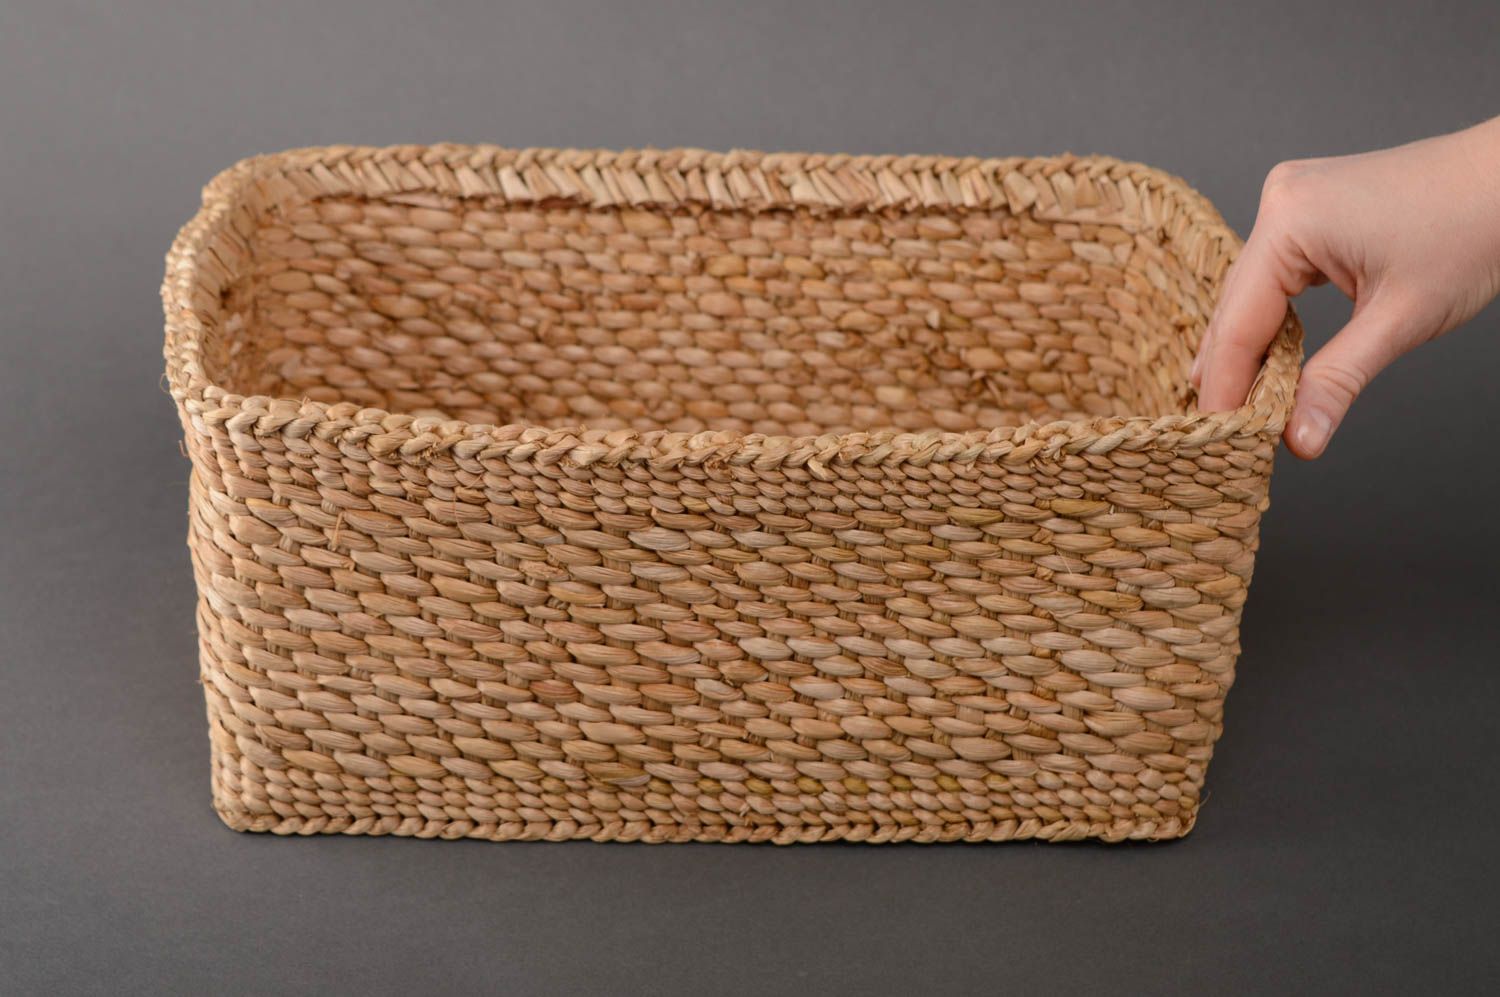 Reedmace woven linen basket photo 4